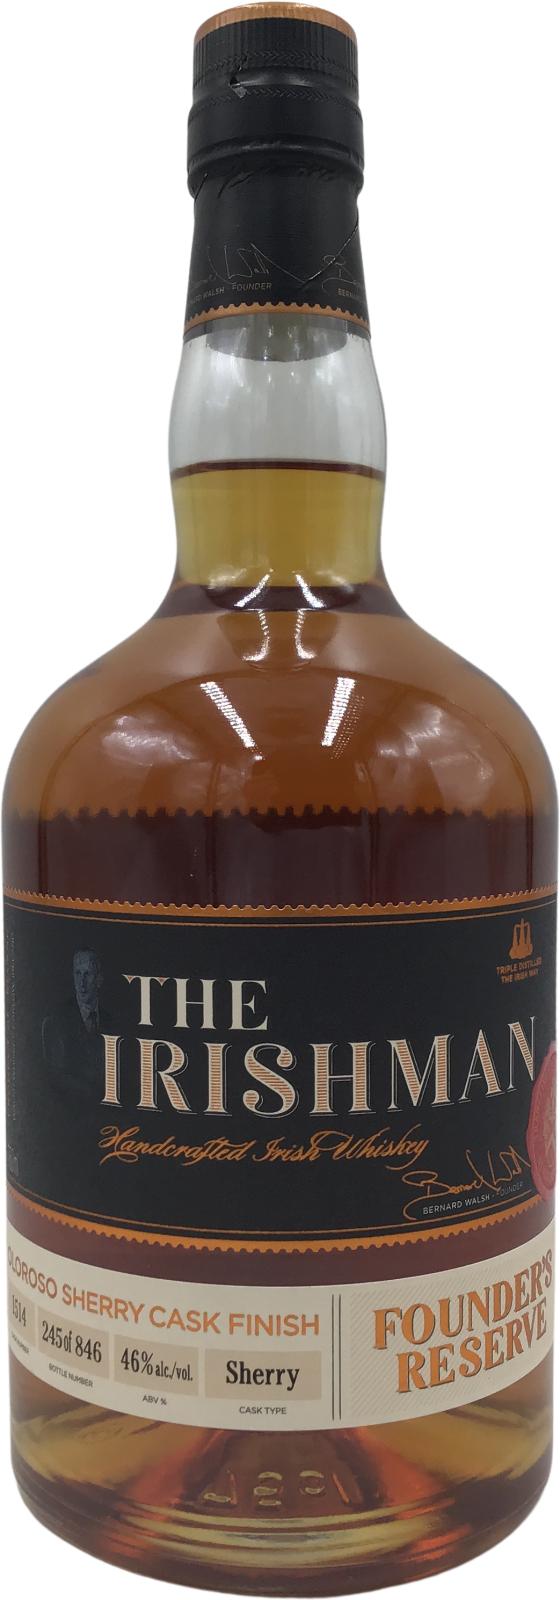 The Irishman Founder's Reserve Oloroso Sherry Cask Finish ex-Bourbon + Oloroso Sherry Finish 46% 750ml